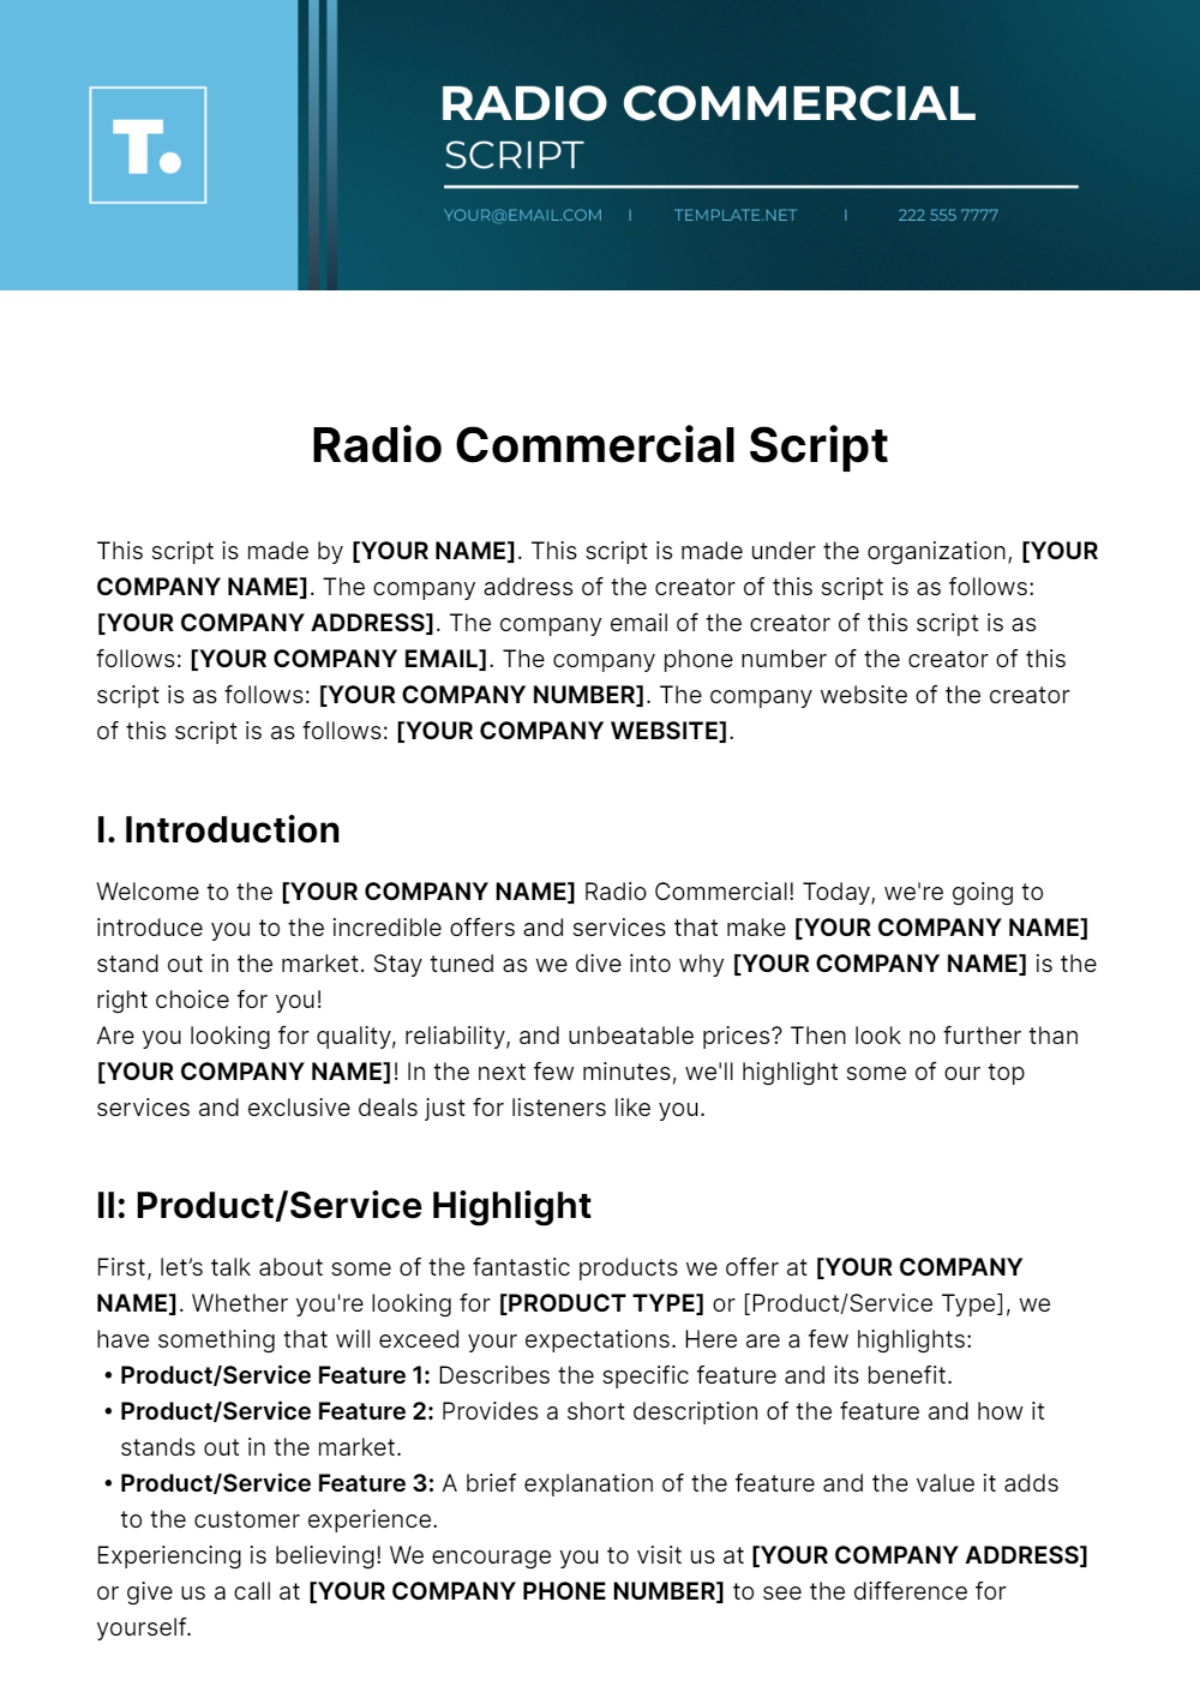 Radio Commercial Script Template